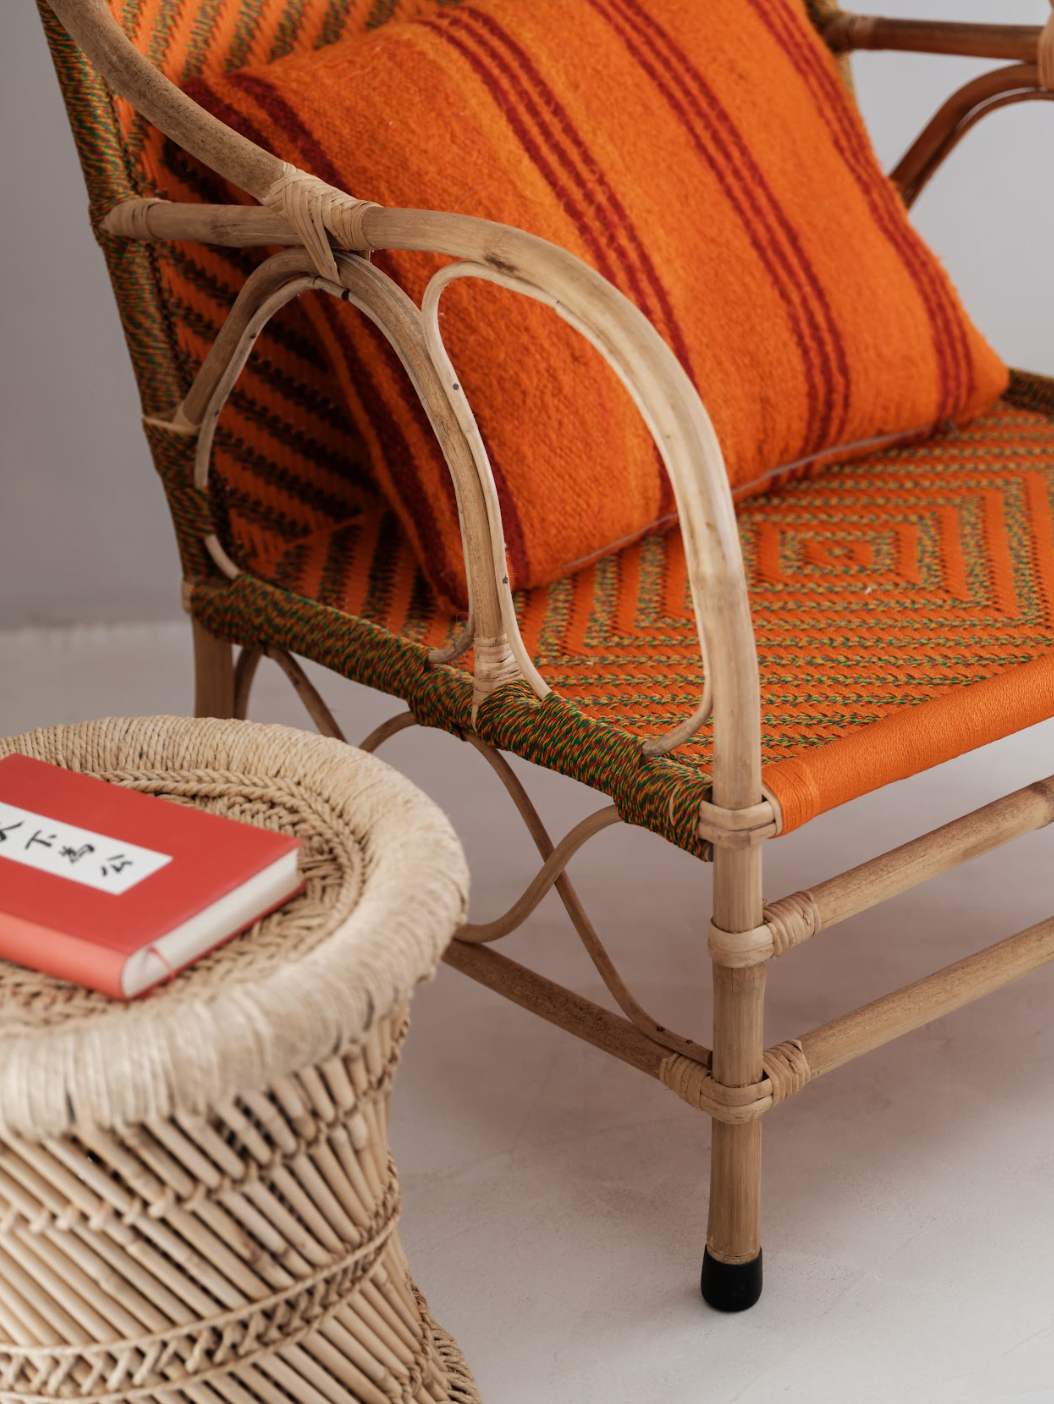 Detail of a rattan armchair and orange cushion.